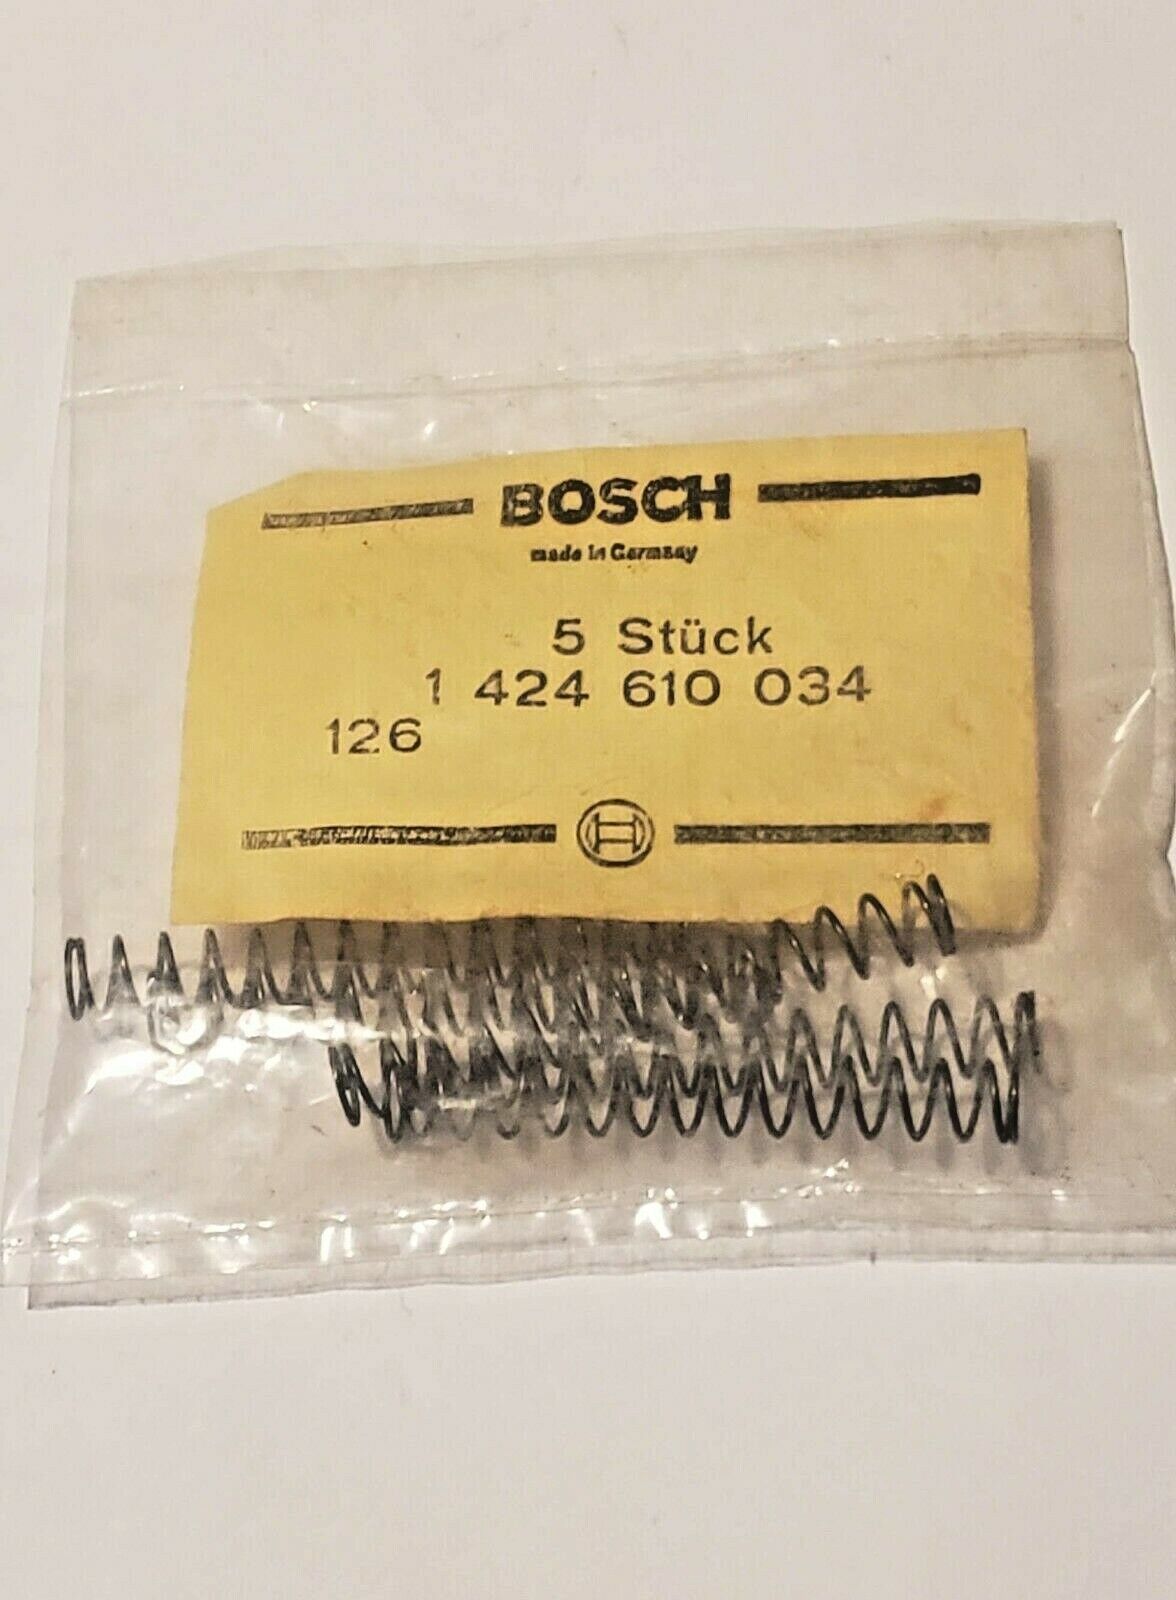 BOSCH 1424610034 Injection pump springs pack of 5 springs